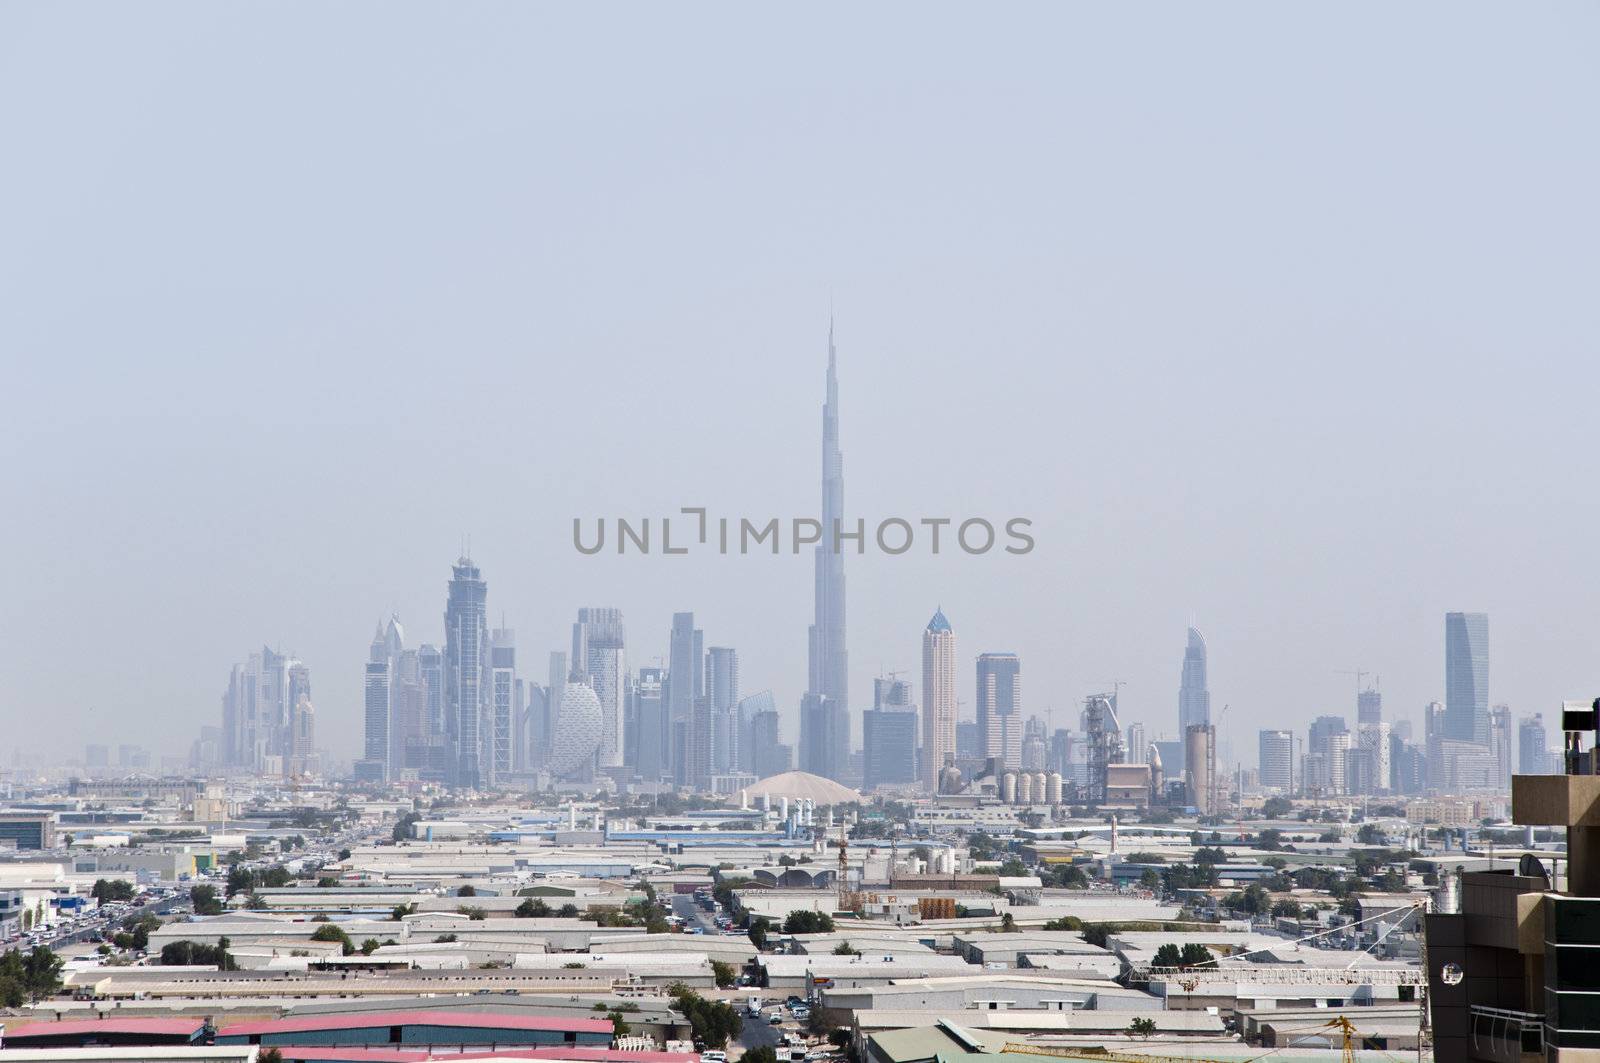 Dubai skyline with high towers, taken from Al Barsha, Dubai, UAE